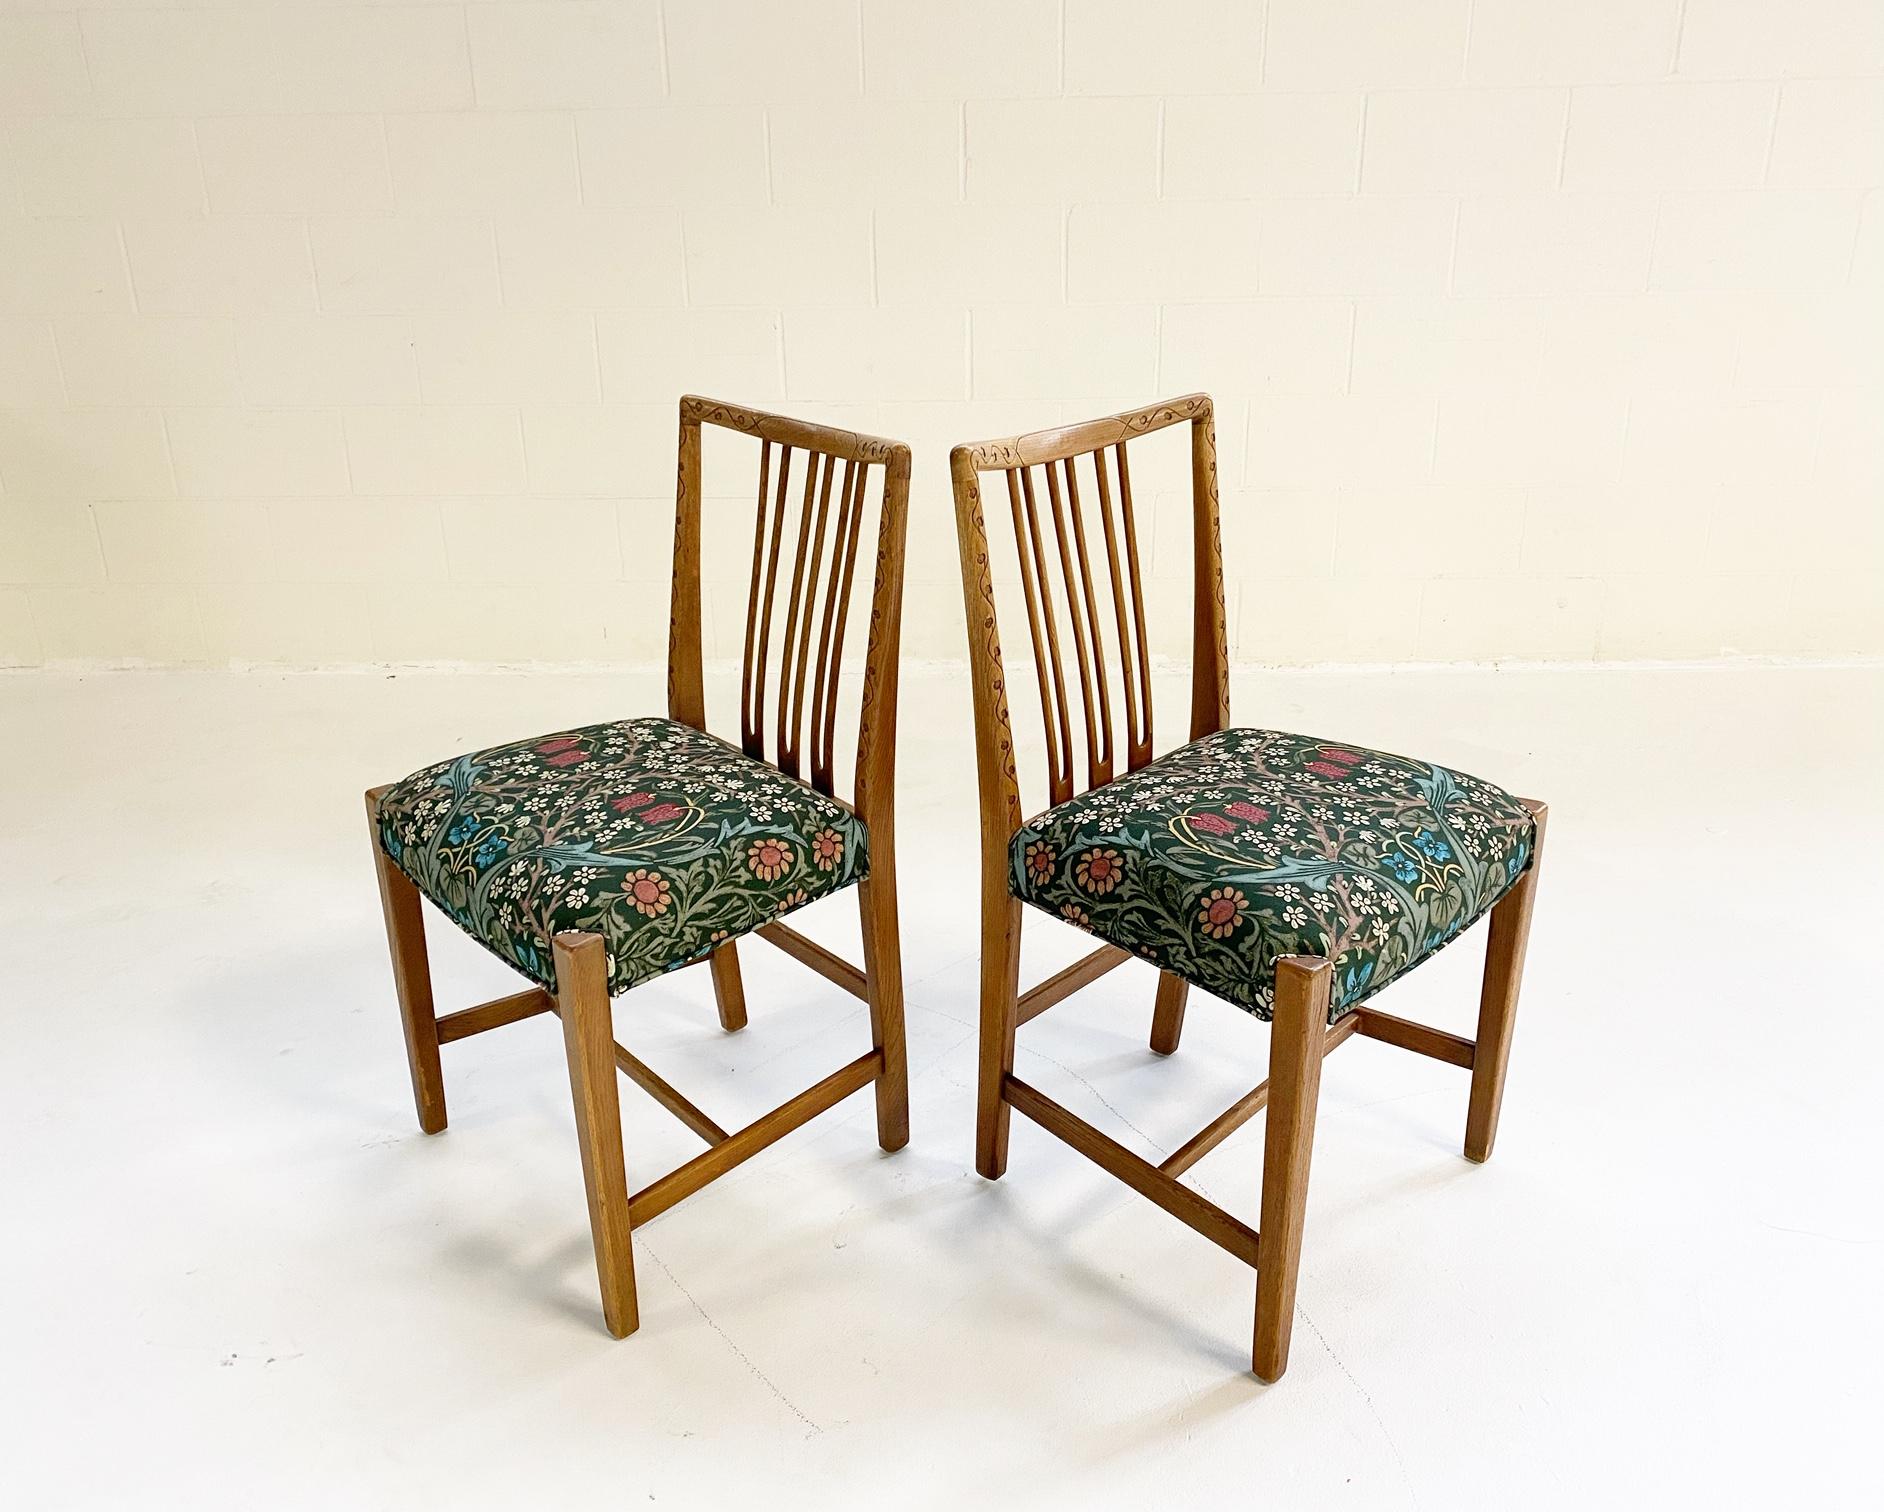 20th Century Hans Wegner Dining Chairs in William Morris Blackthorn, Pair For Sale